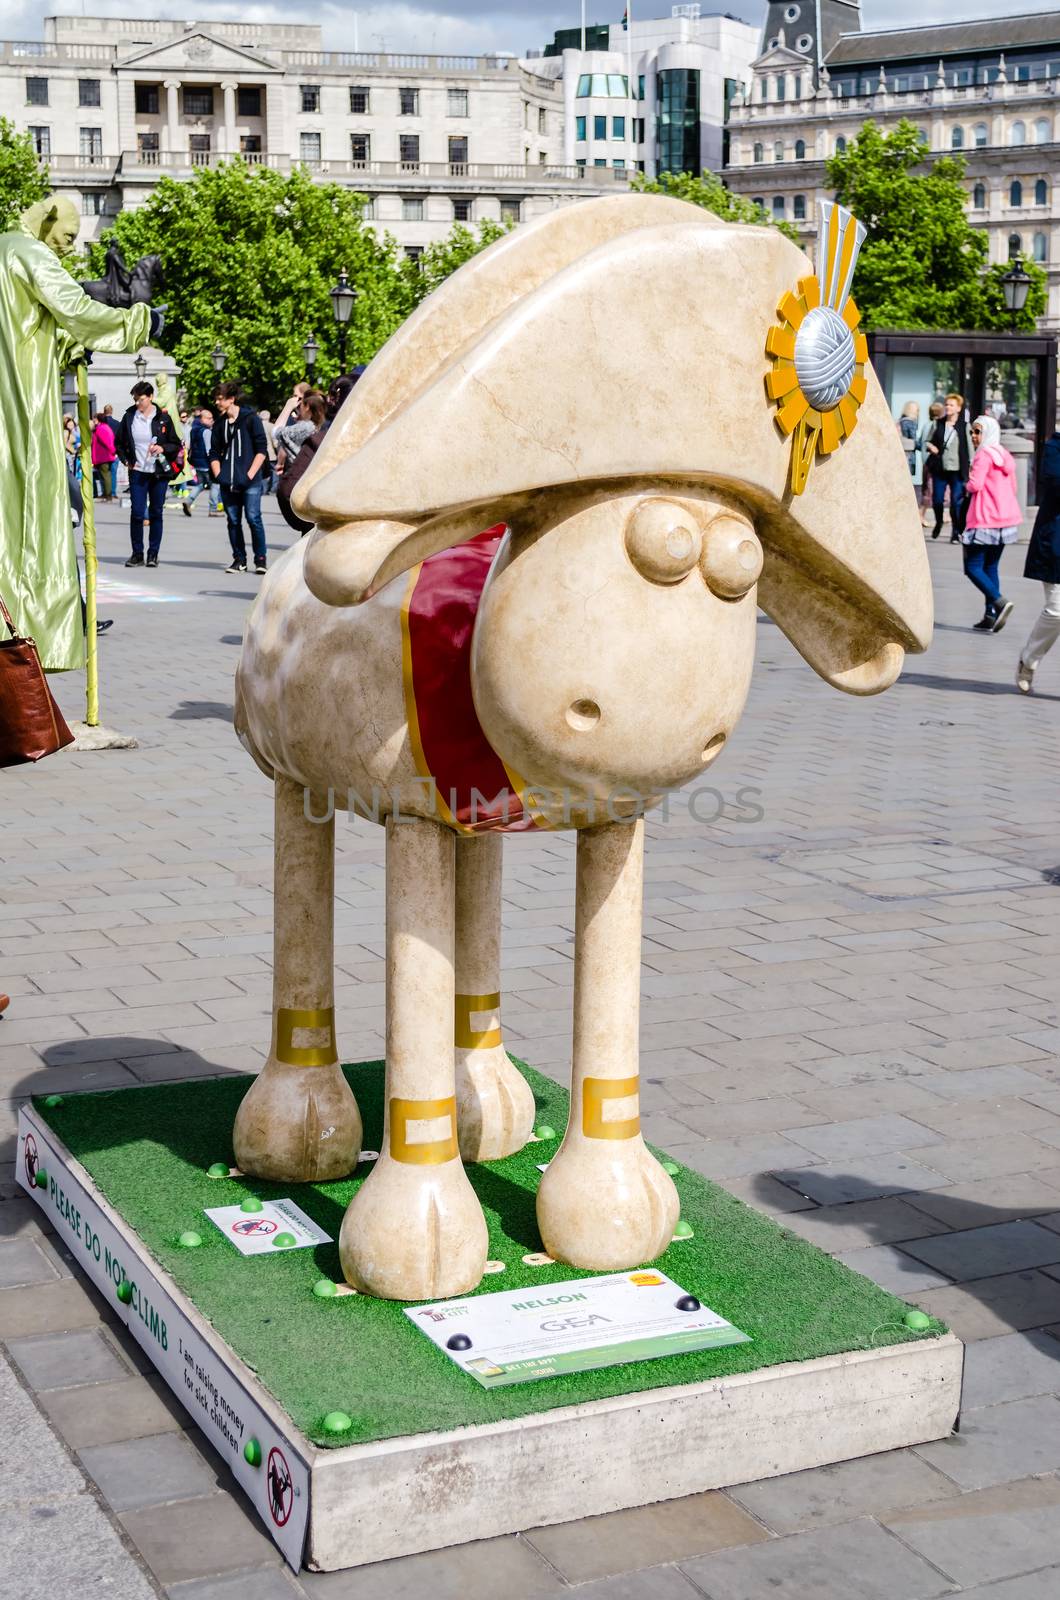 Aardman's Shaun The Sheep Character in Central London by marcorubino